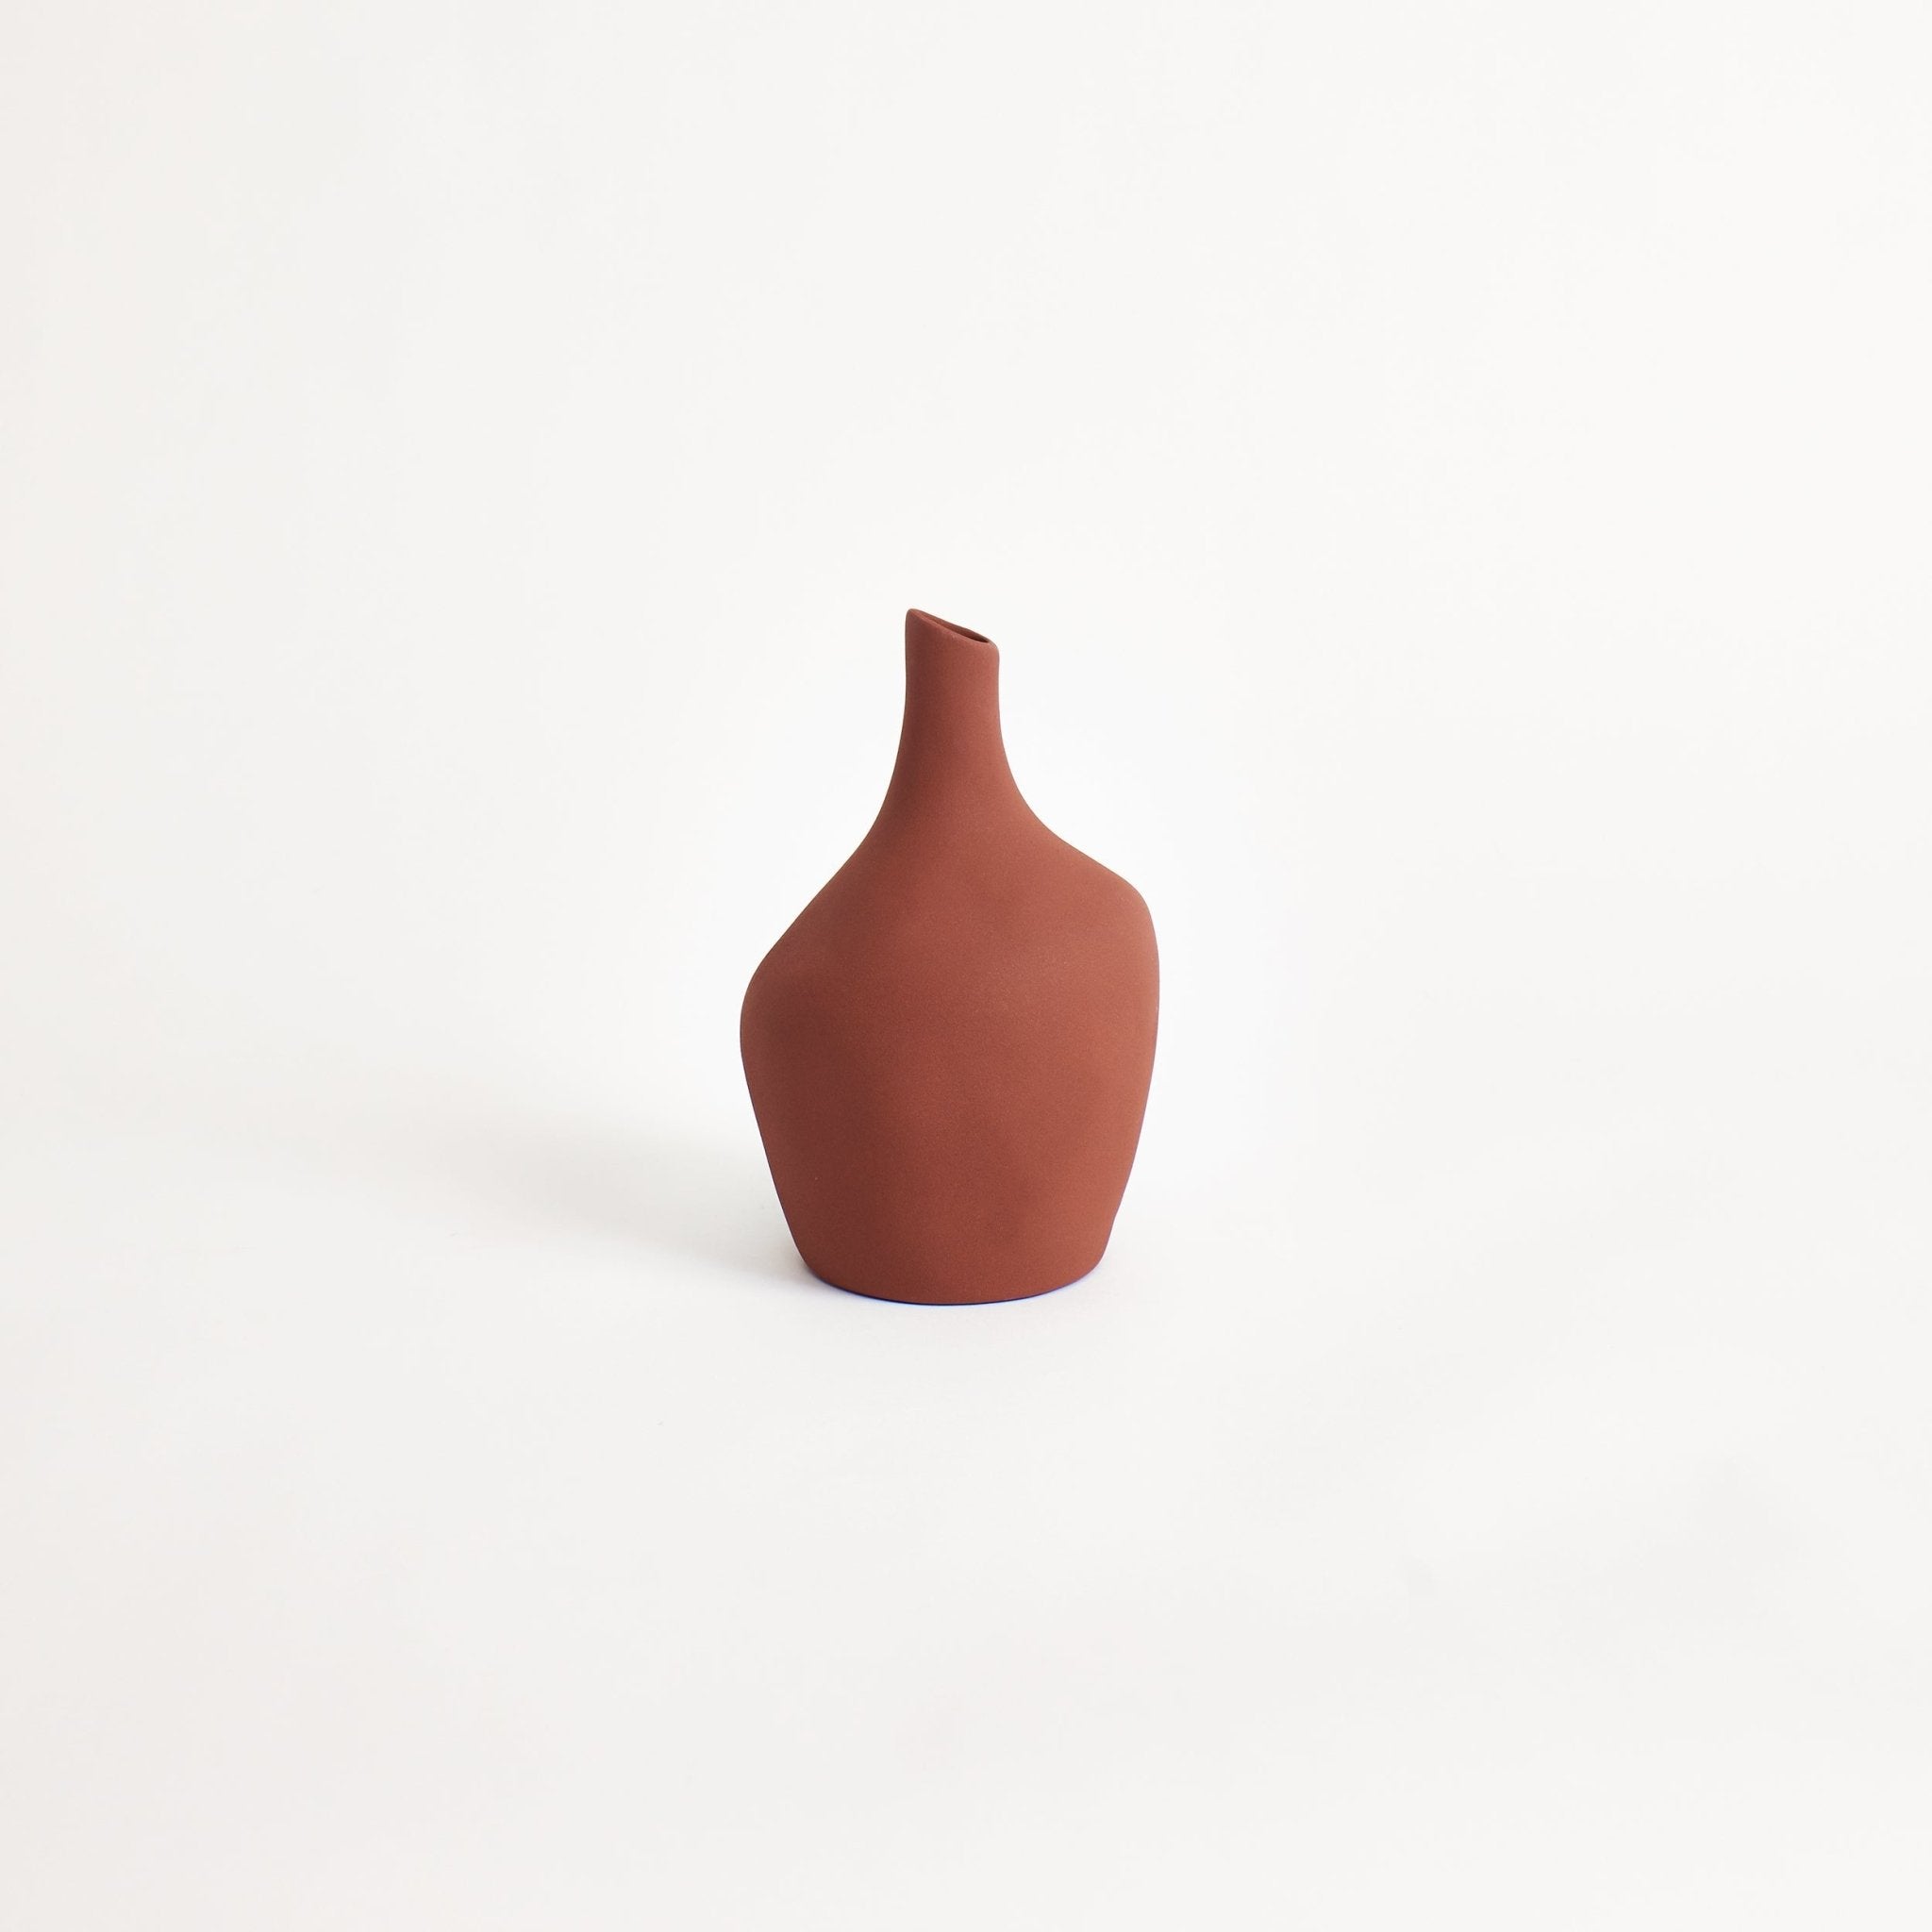 Mini Sailor Vase - Brick color vase from Project 213A